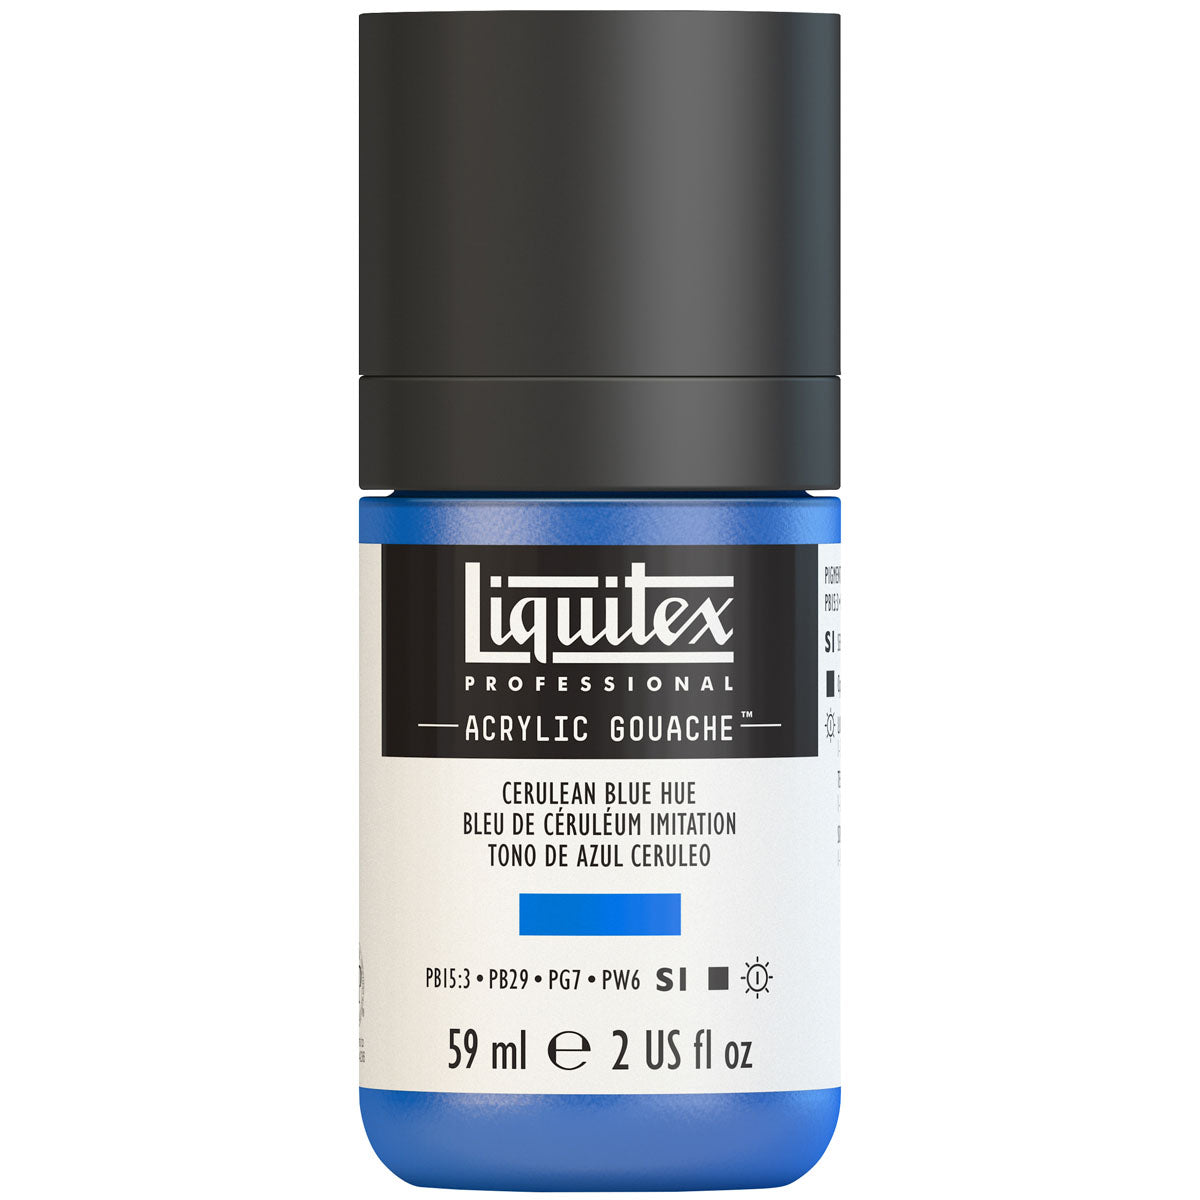 Liquitex-Gouache Acrylique 59ml S1-Bleu Céruléen Teinte